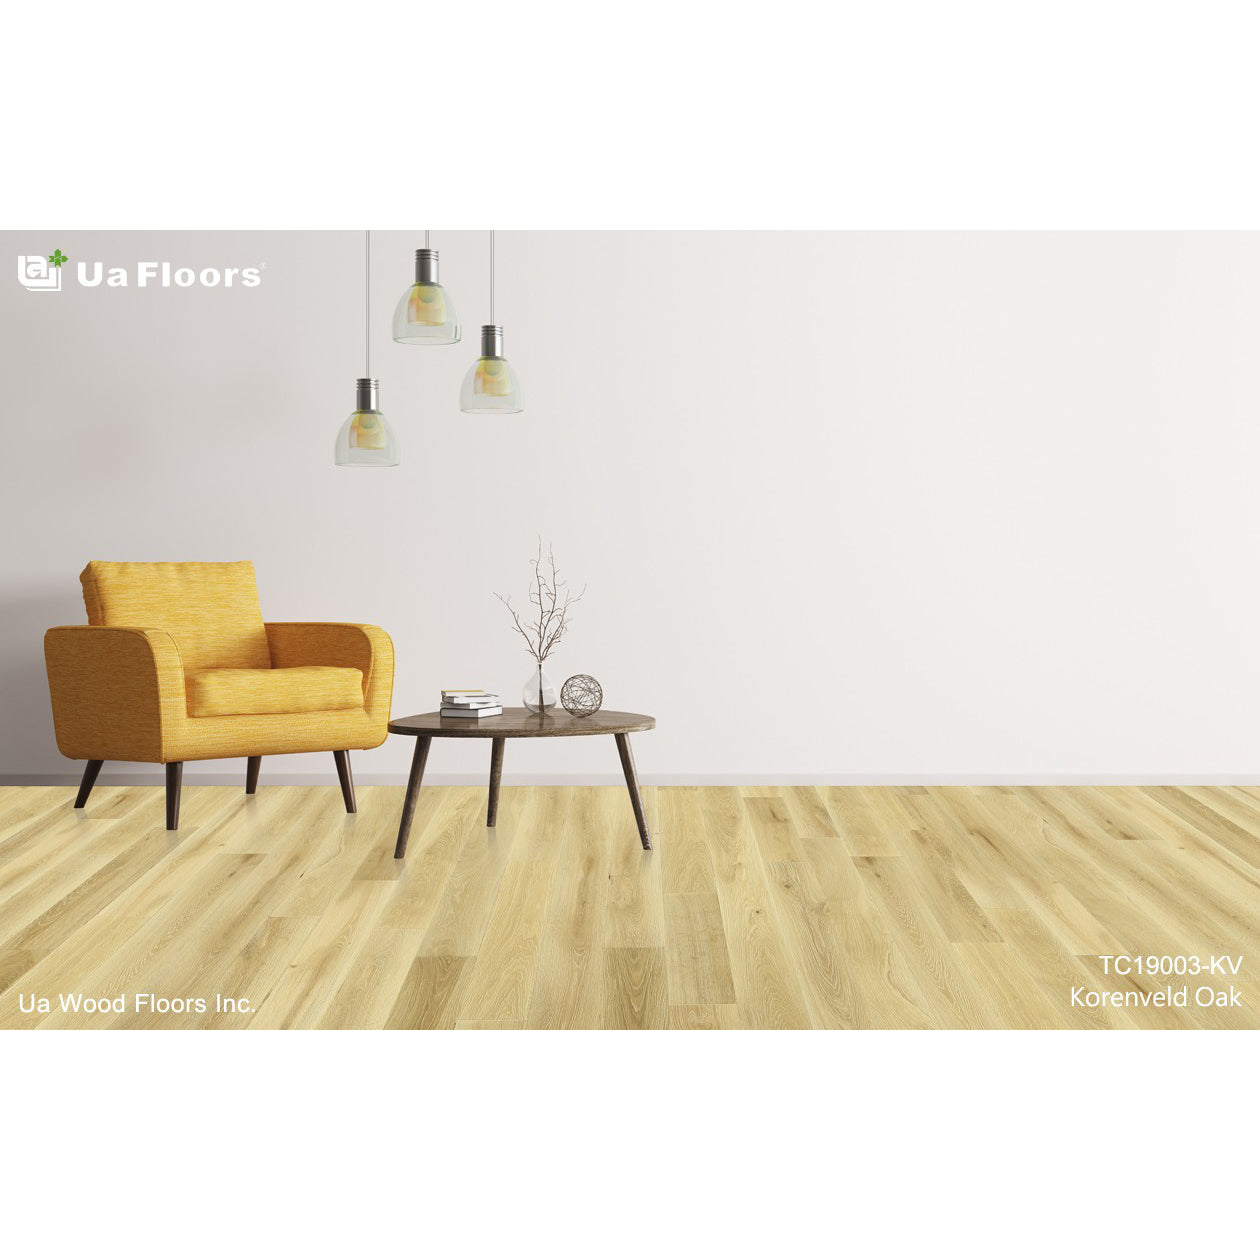 Ua Floors - Classics Collection - Korenveld Euro Oak